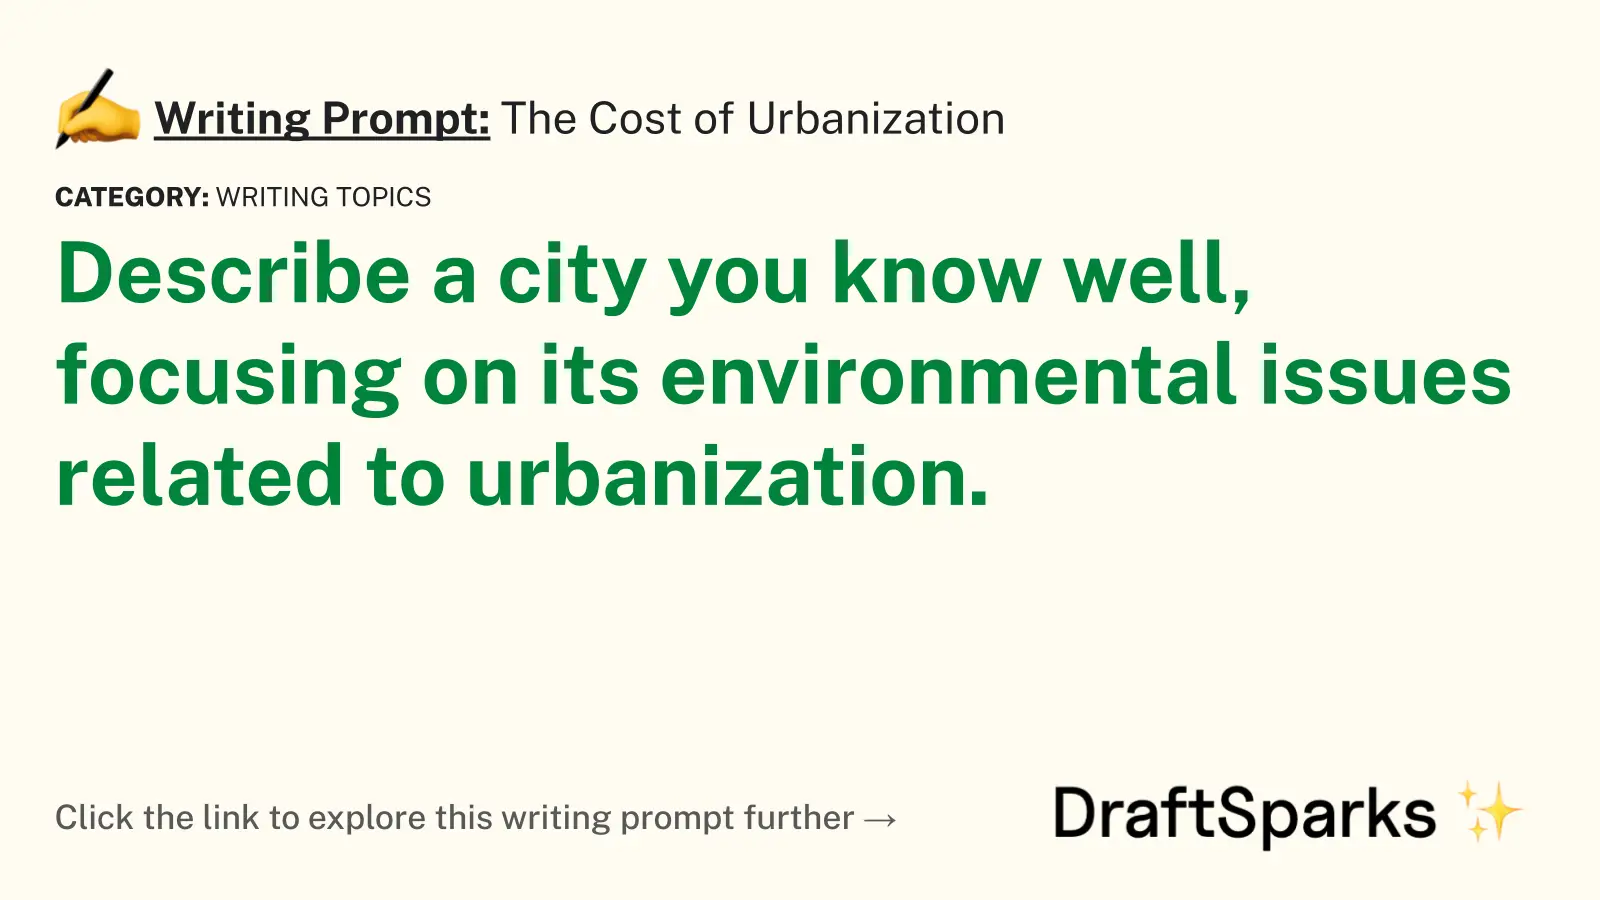 The Cost of Urbanization